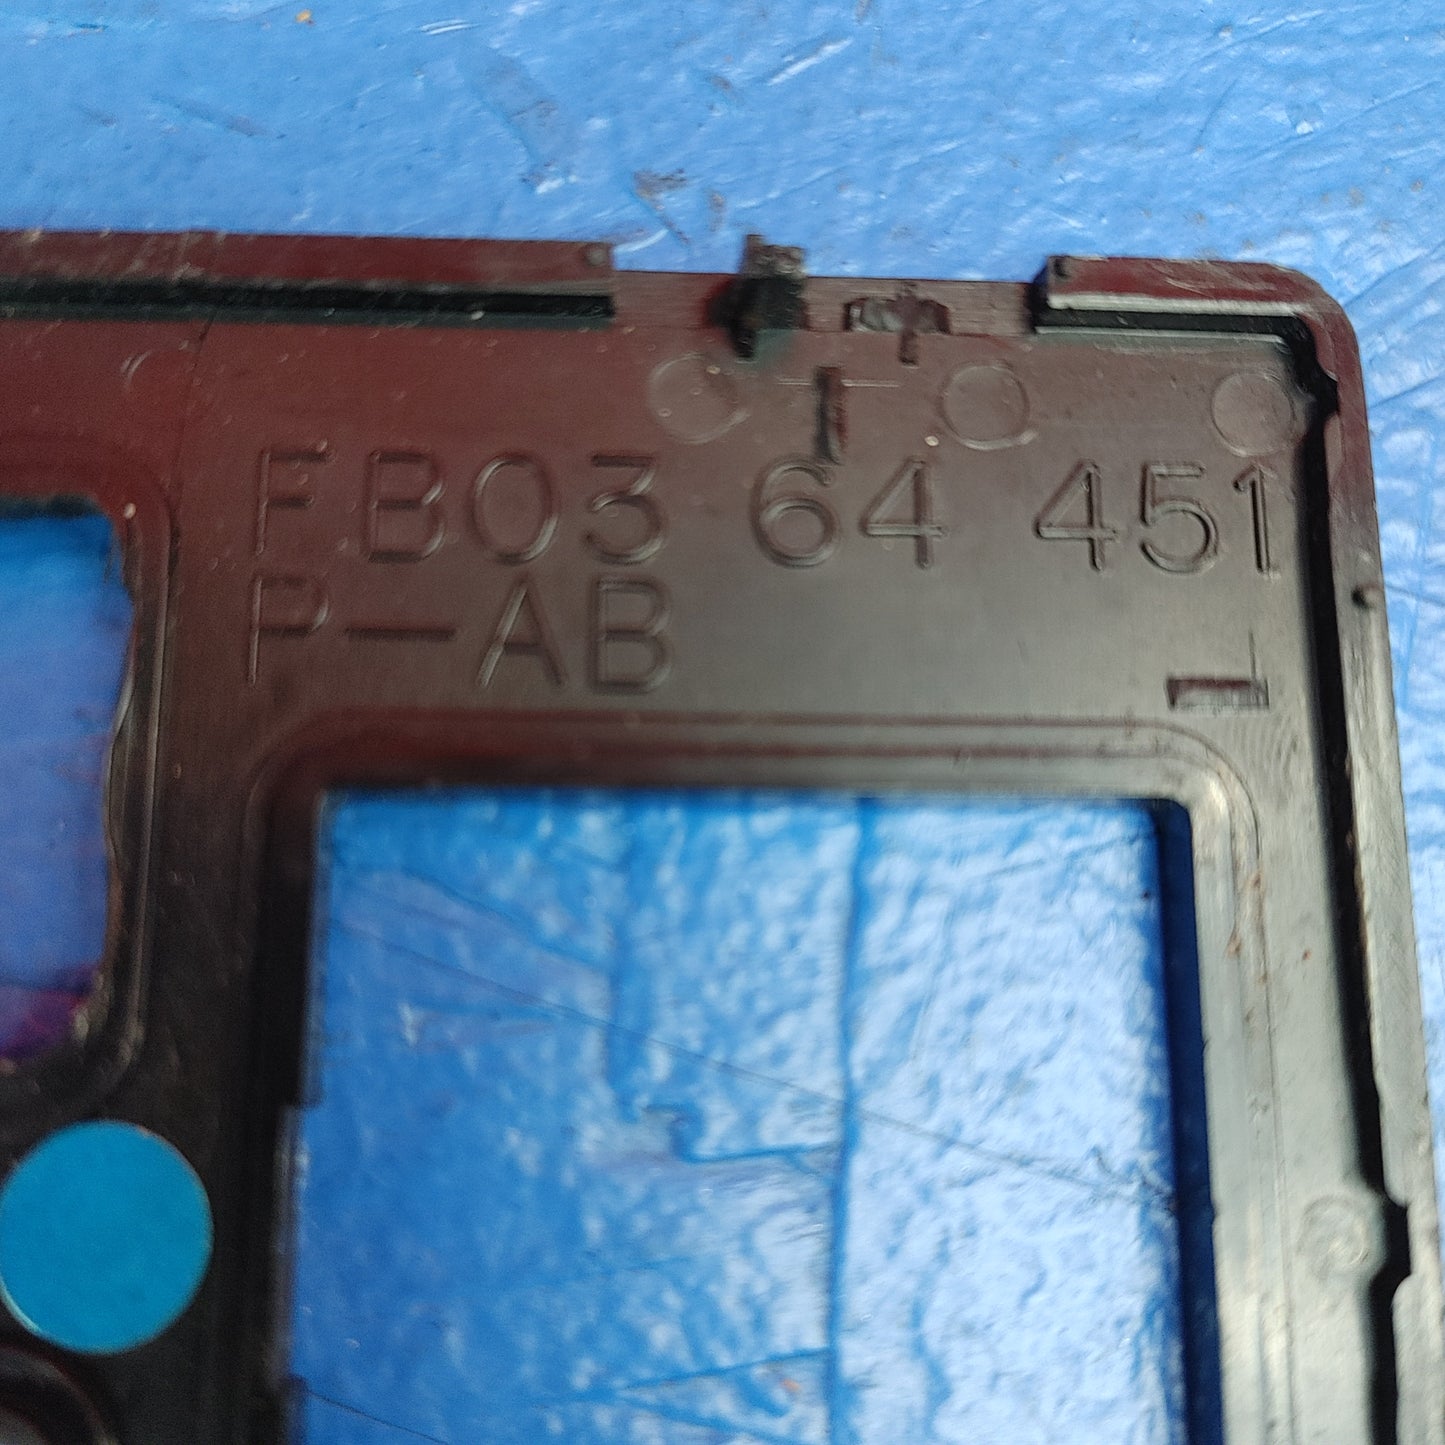 Center Console Switch Panel Trim FB03-64-451 RX7 FC FC3S 79 - 85 Mazda S7B15/9